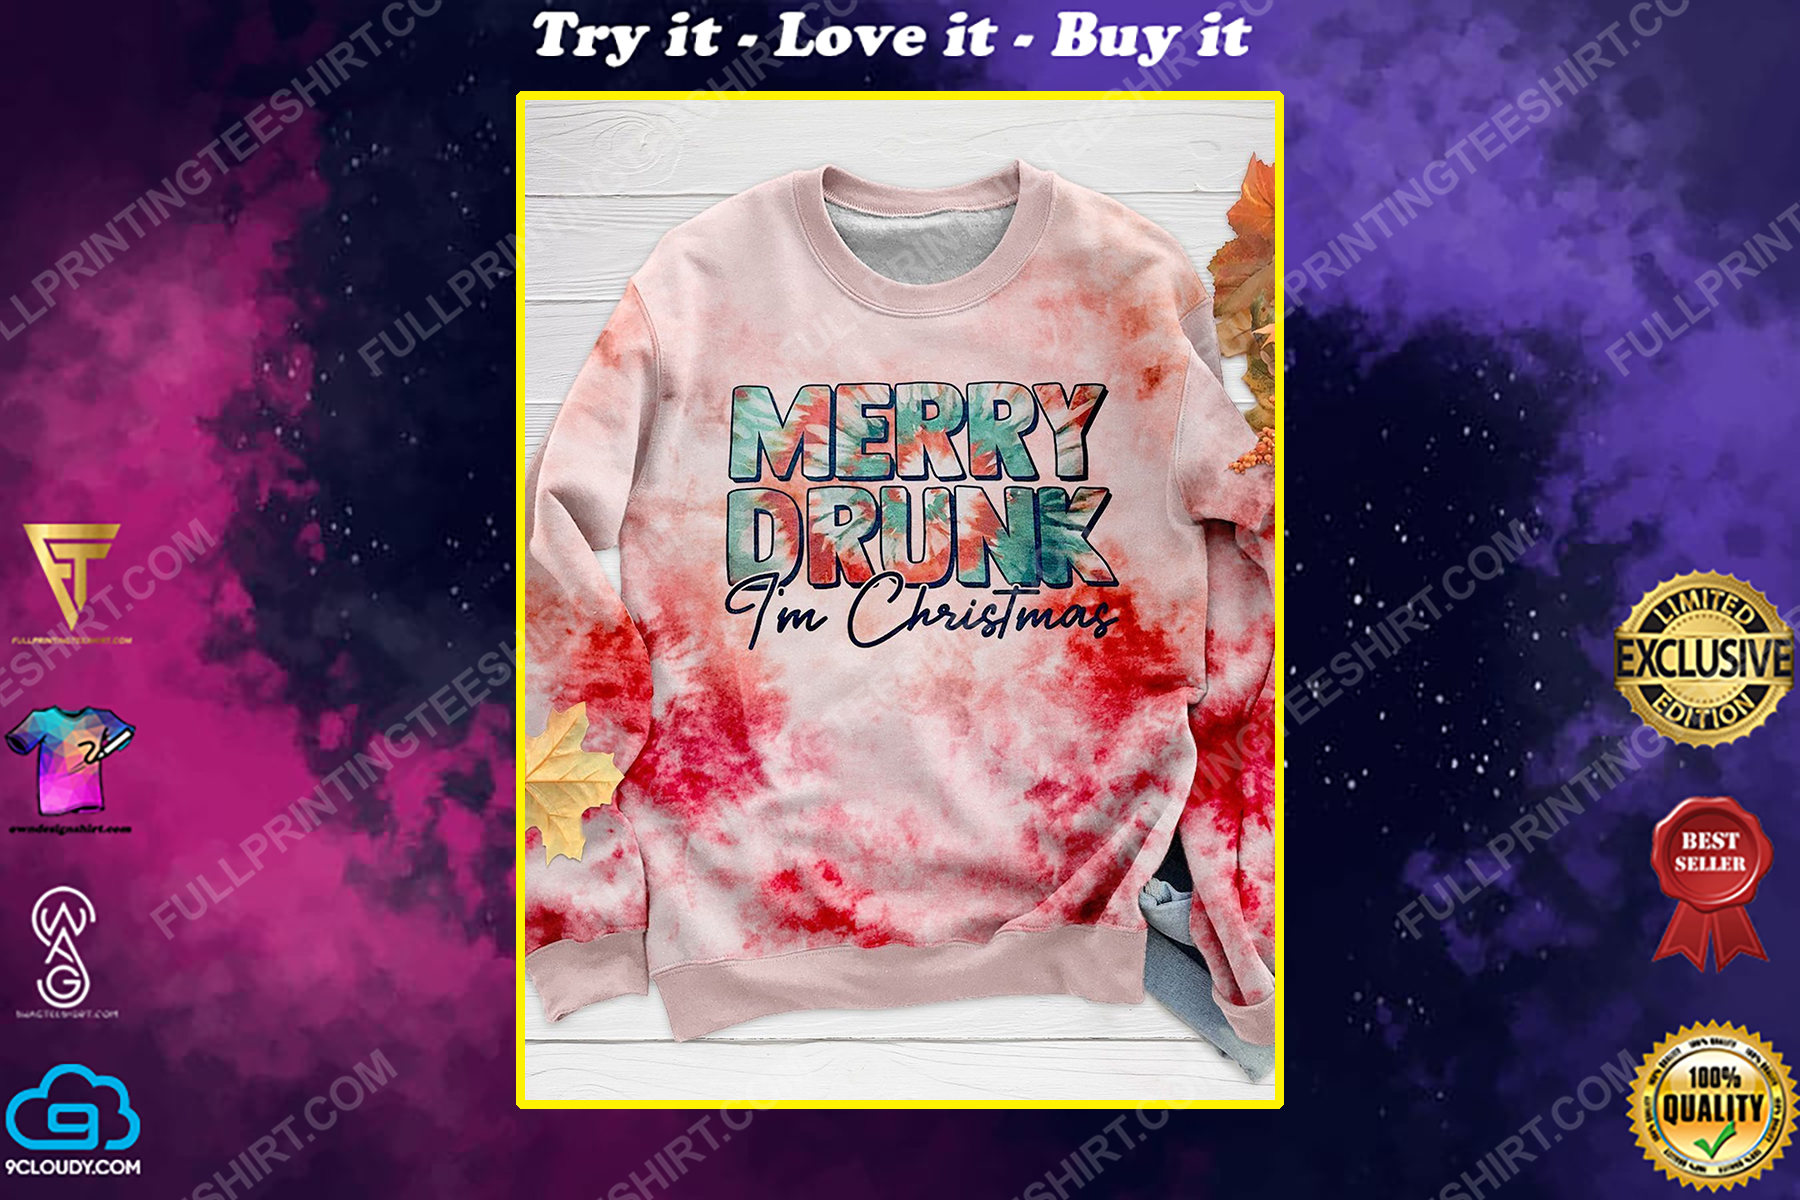 Merry drunk i'm christmas colorful full print shirt